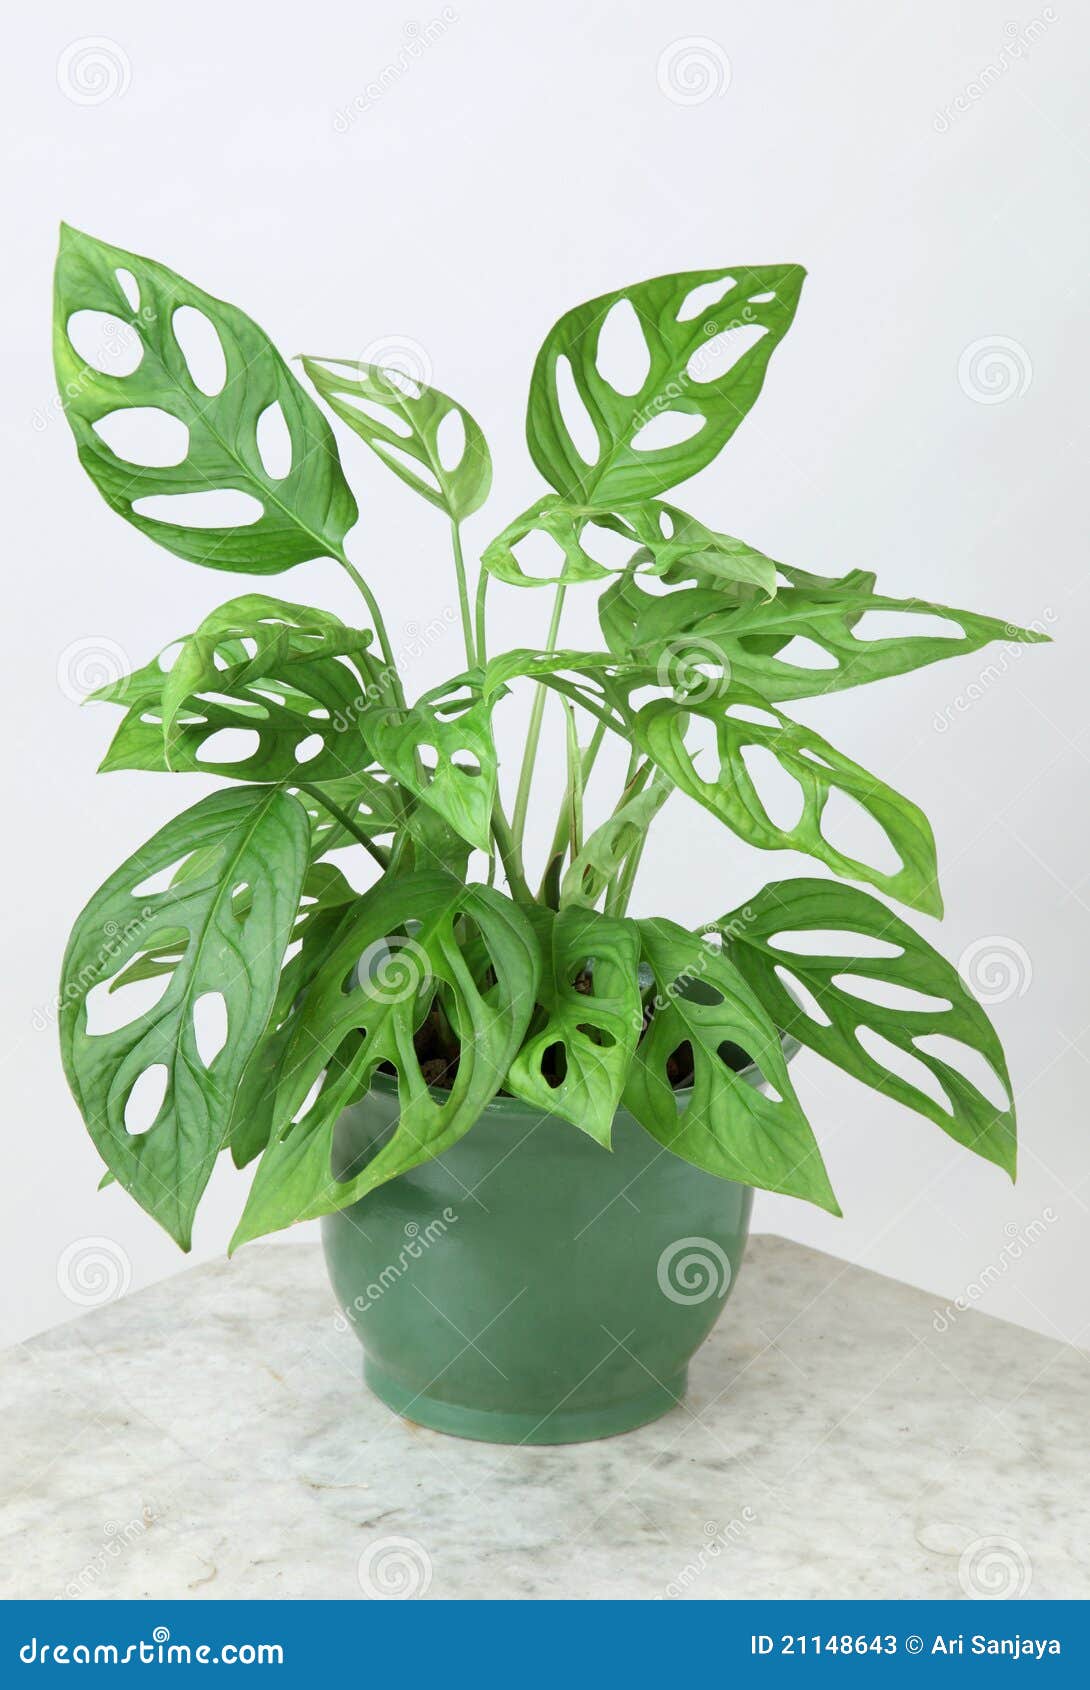 https://thumbs.dreamstime.com/z/plantas-ornamentales-21148643.jpg